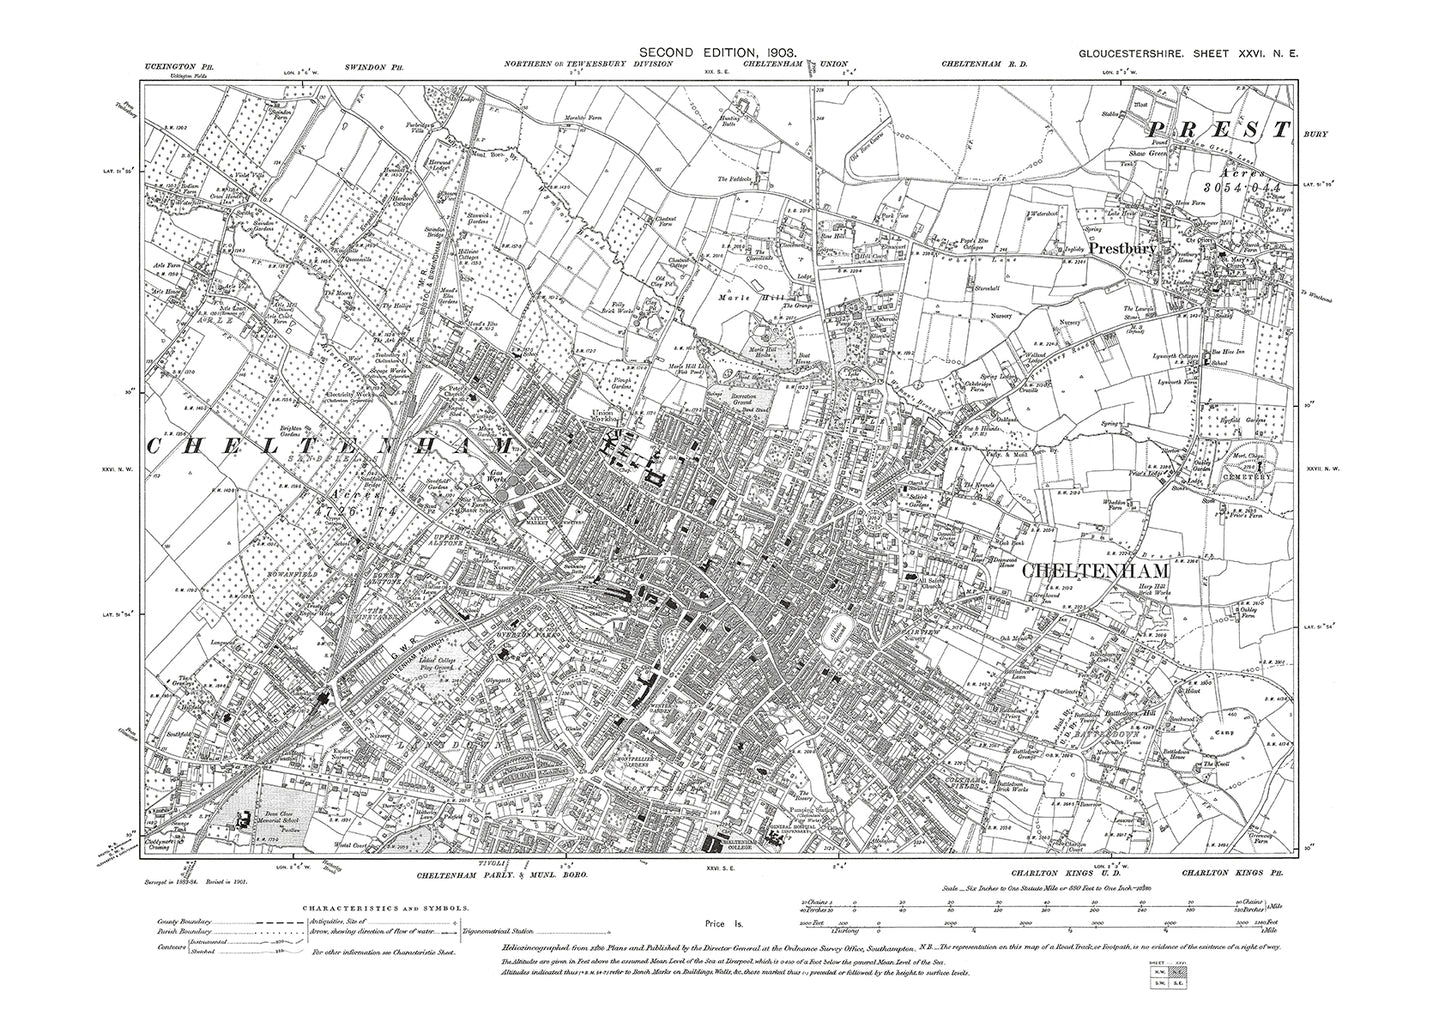 Old OS map dated 1903, showing Cheltenham, Prestbury in Gloucestershire - 26NE